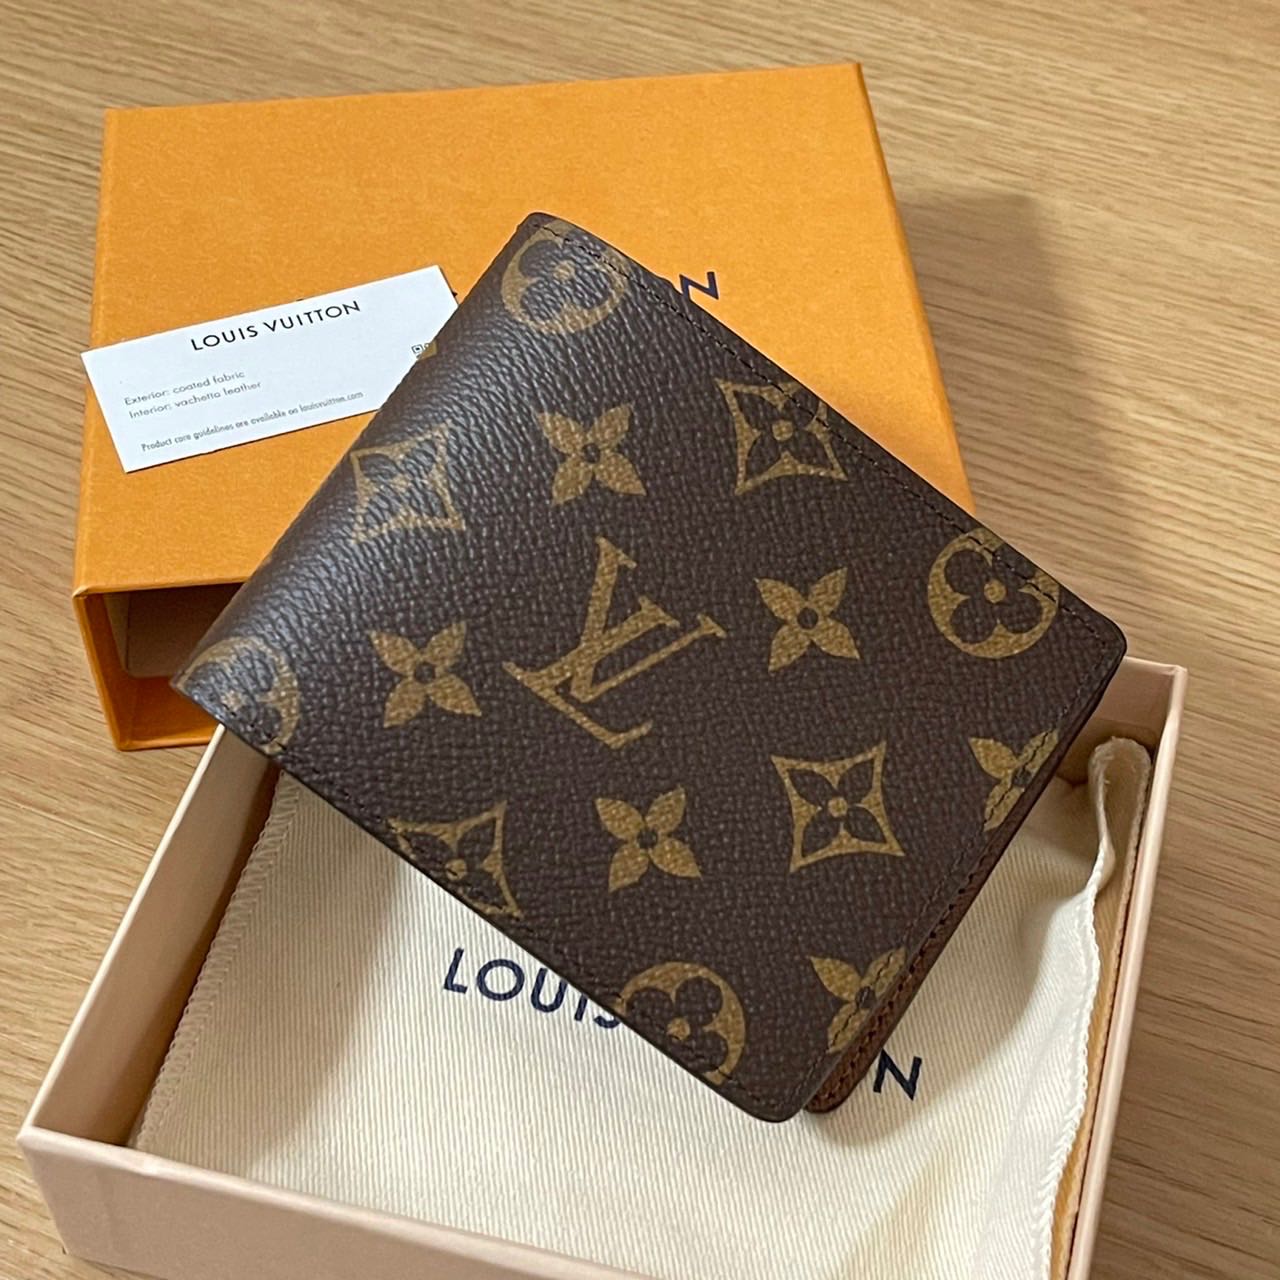 Louis Vuitton cardhold : r/DHgate